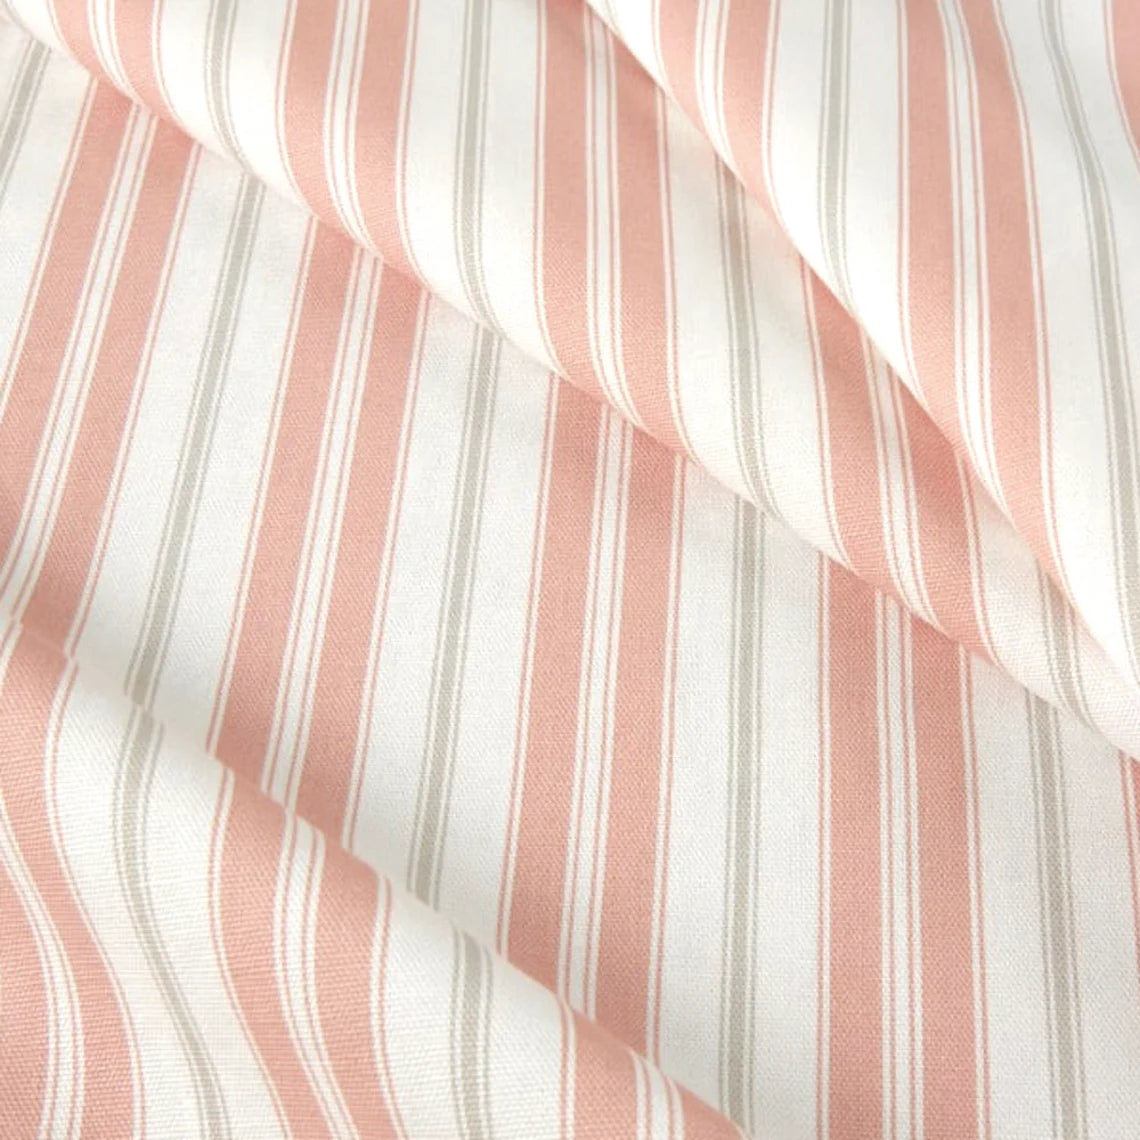 tailored bedskirt in newbury blush stripe- pink, gray, white